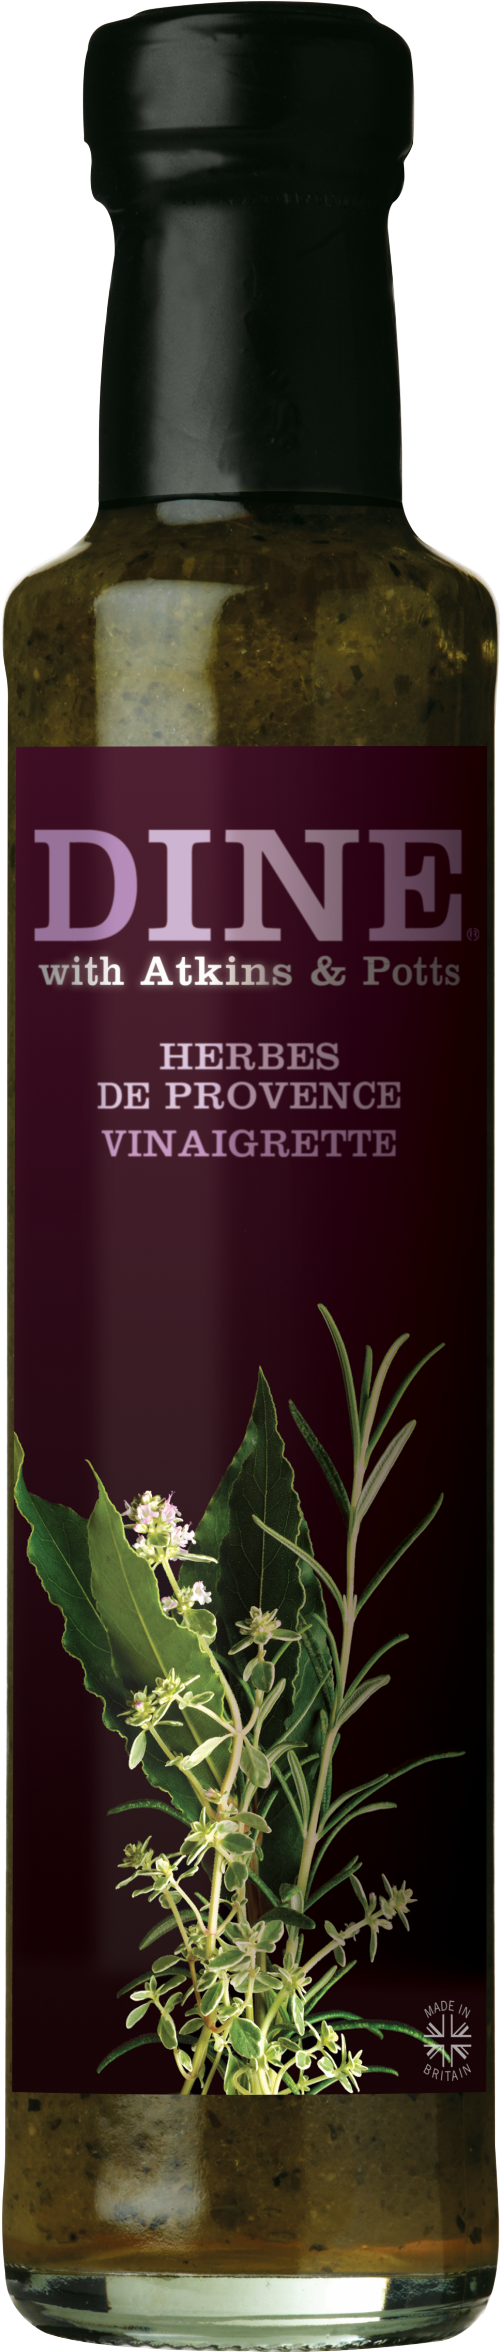 ATKINS & POTTS Herbes de Provence Vinaigrette 220g